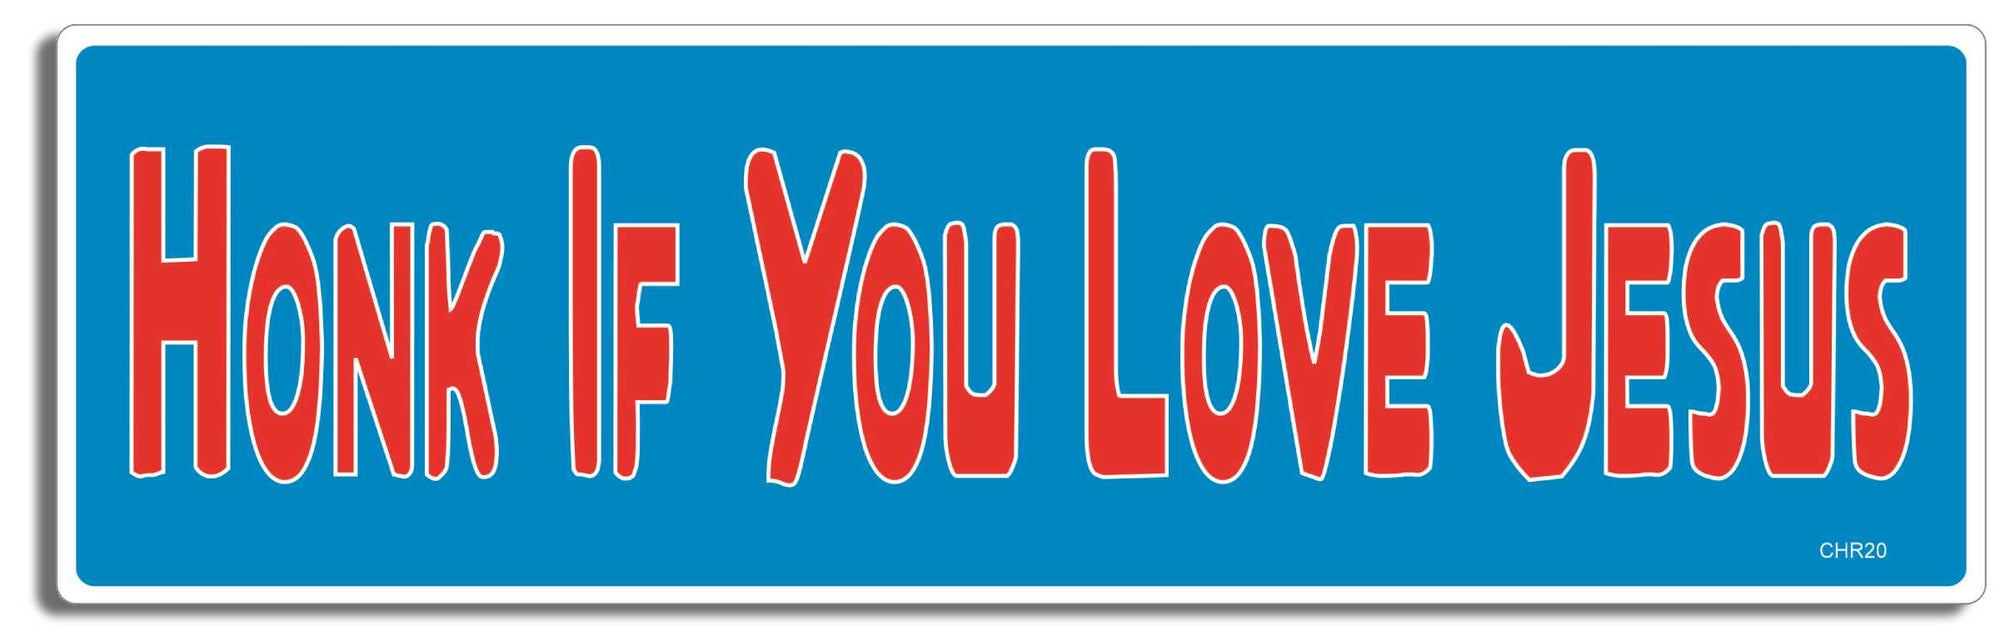 Honk If You Love Jesus - 3" x 10" Bumper Sticker--Car Magnet- -  Decal Bumper Sticker-Christian Bumper Sticker Car Magnet Honk If You Love Jesus-  Decal for carschristian, church, faith, God, jesus, pray, Religion, religious